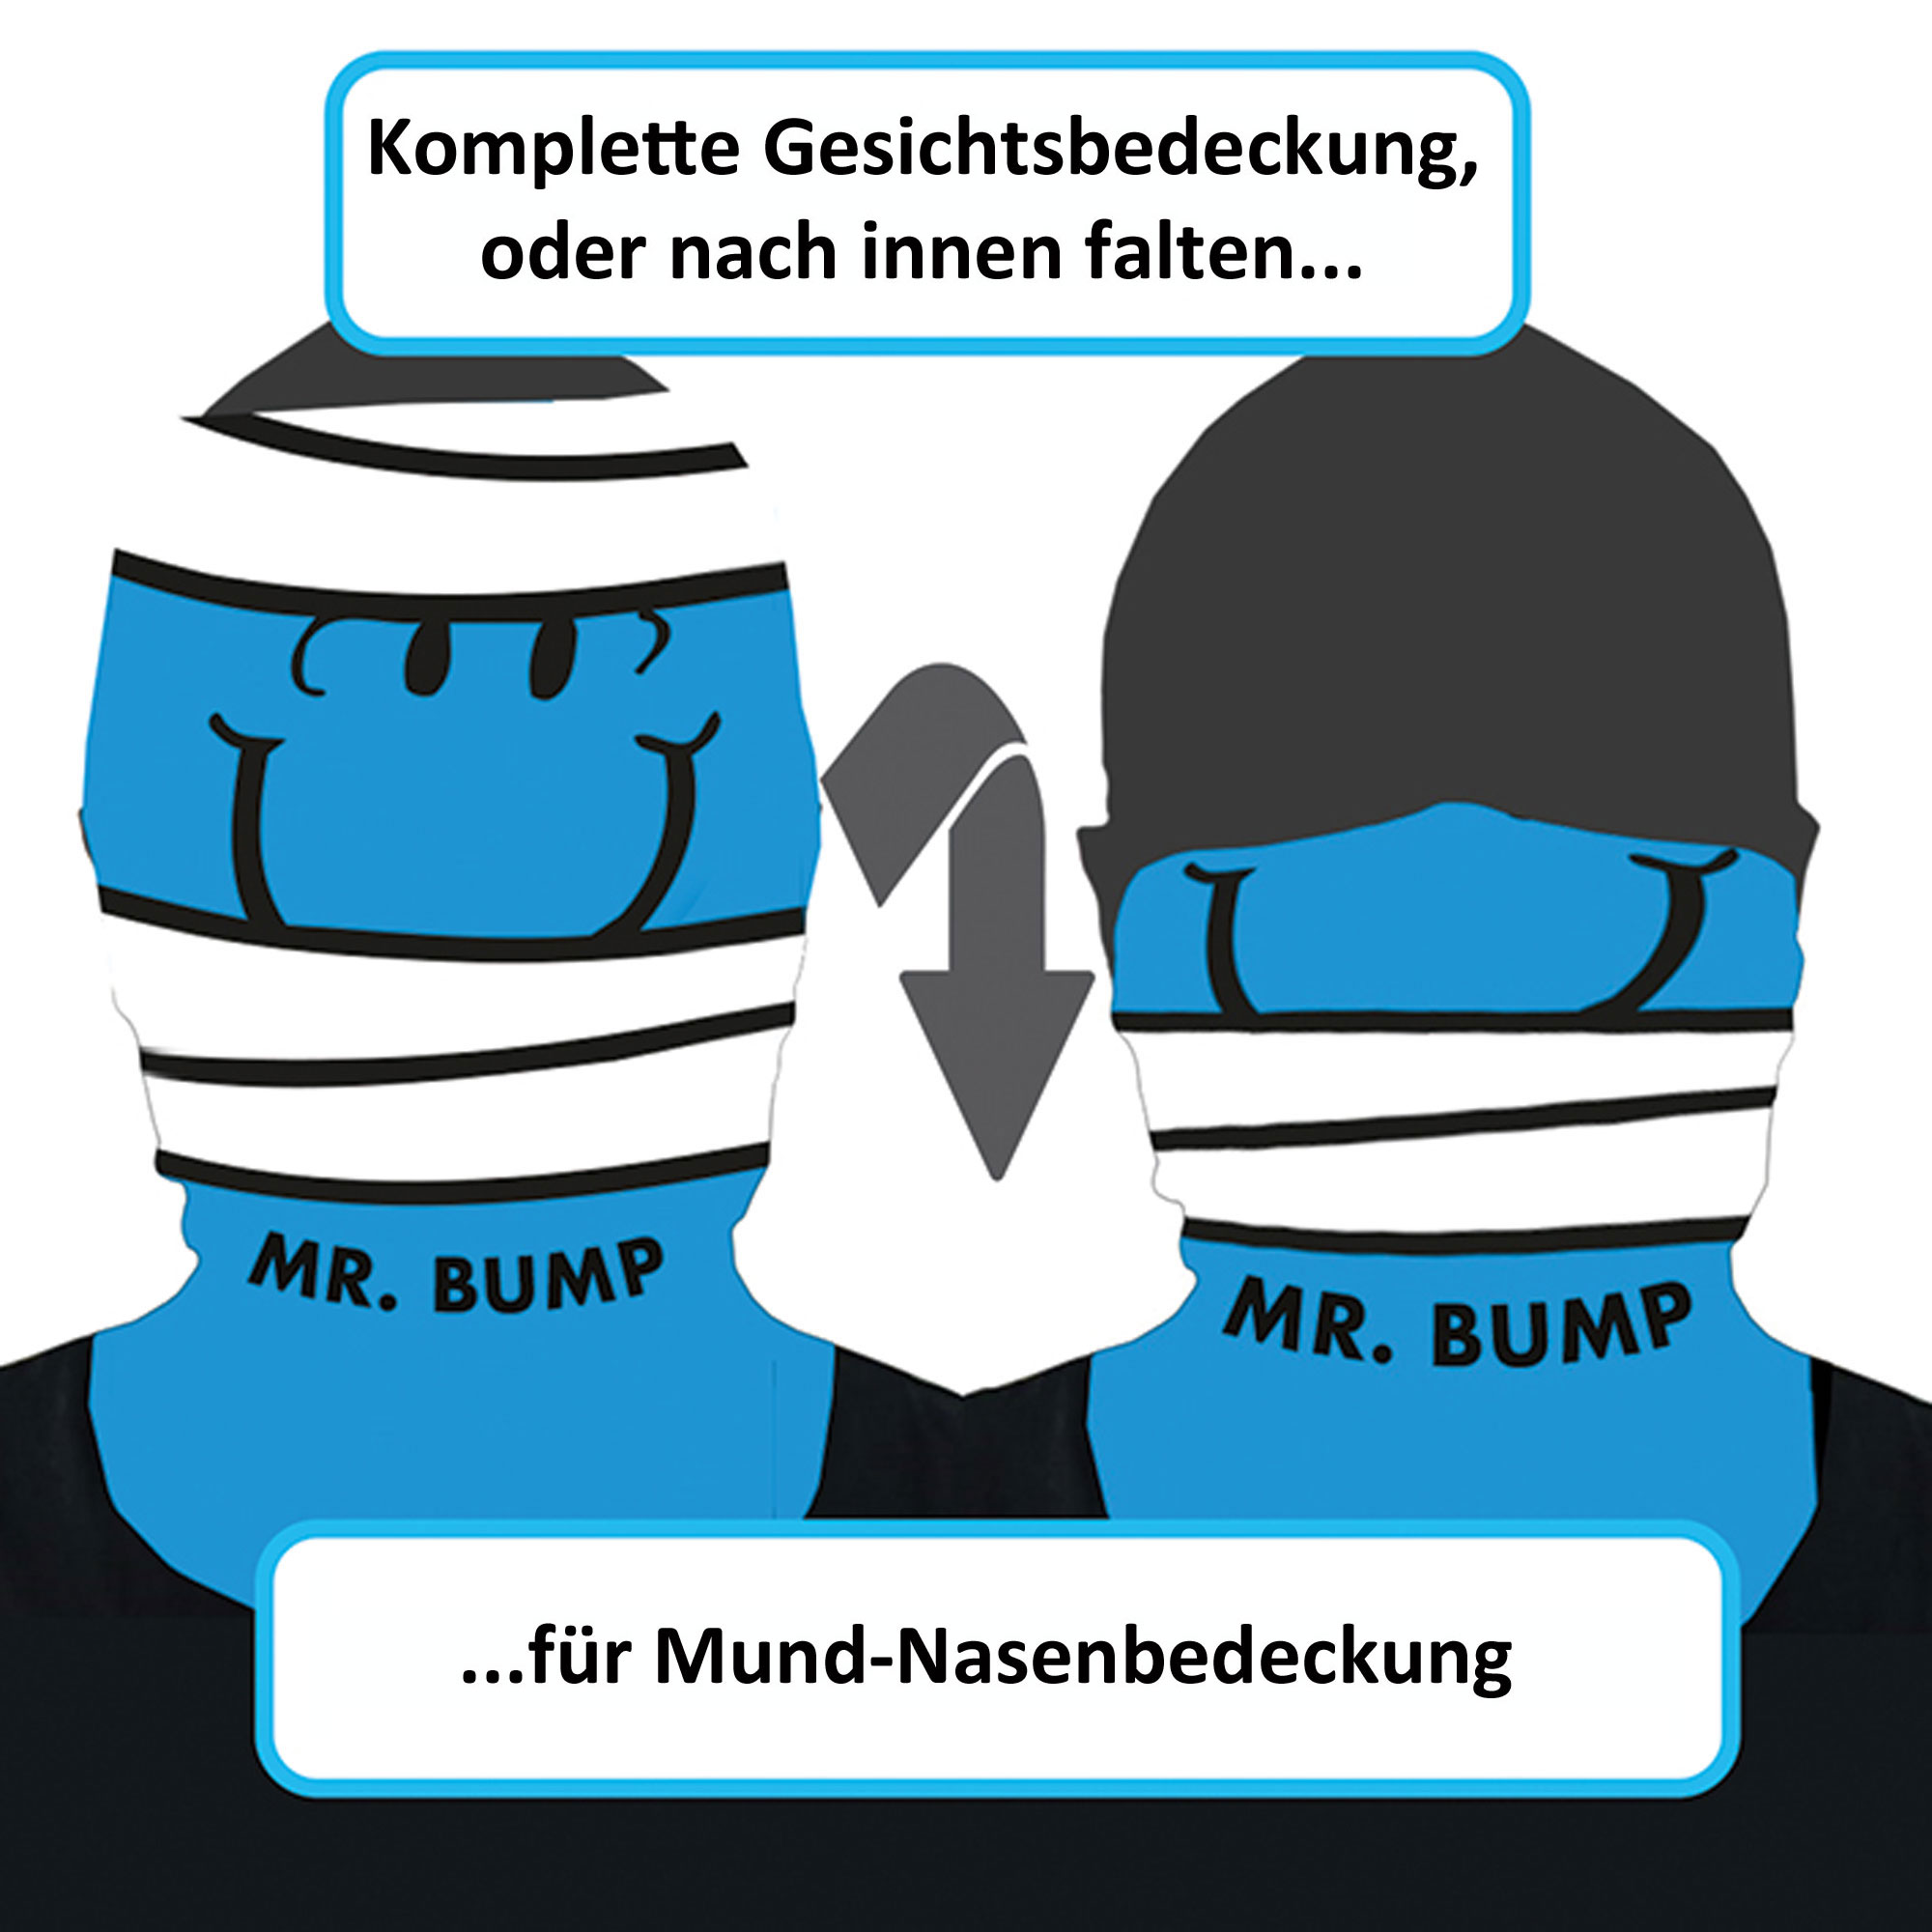 Bump - Mr Multifunktionstuch